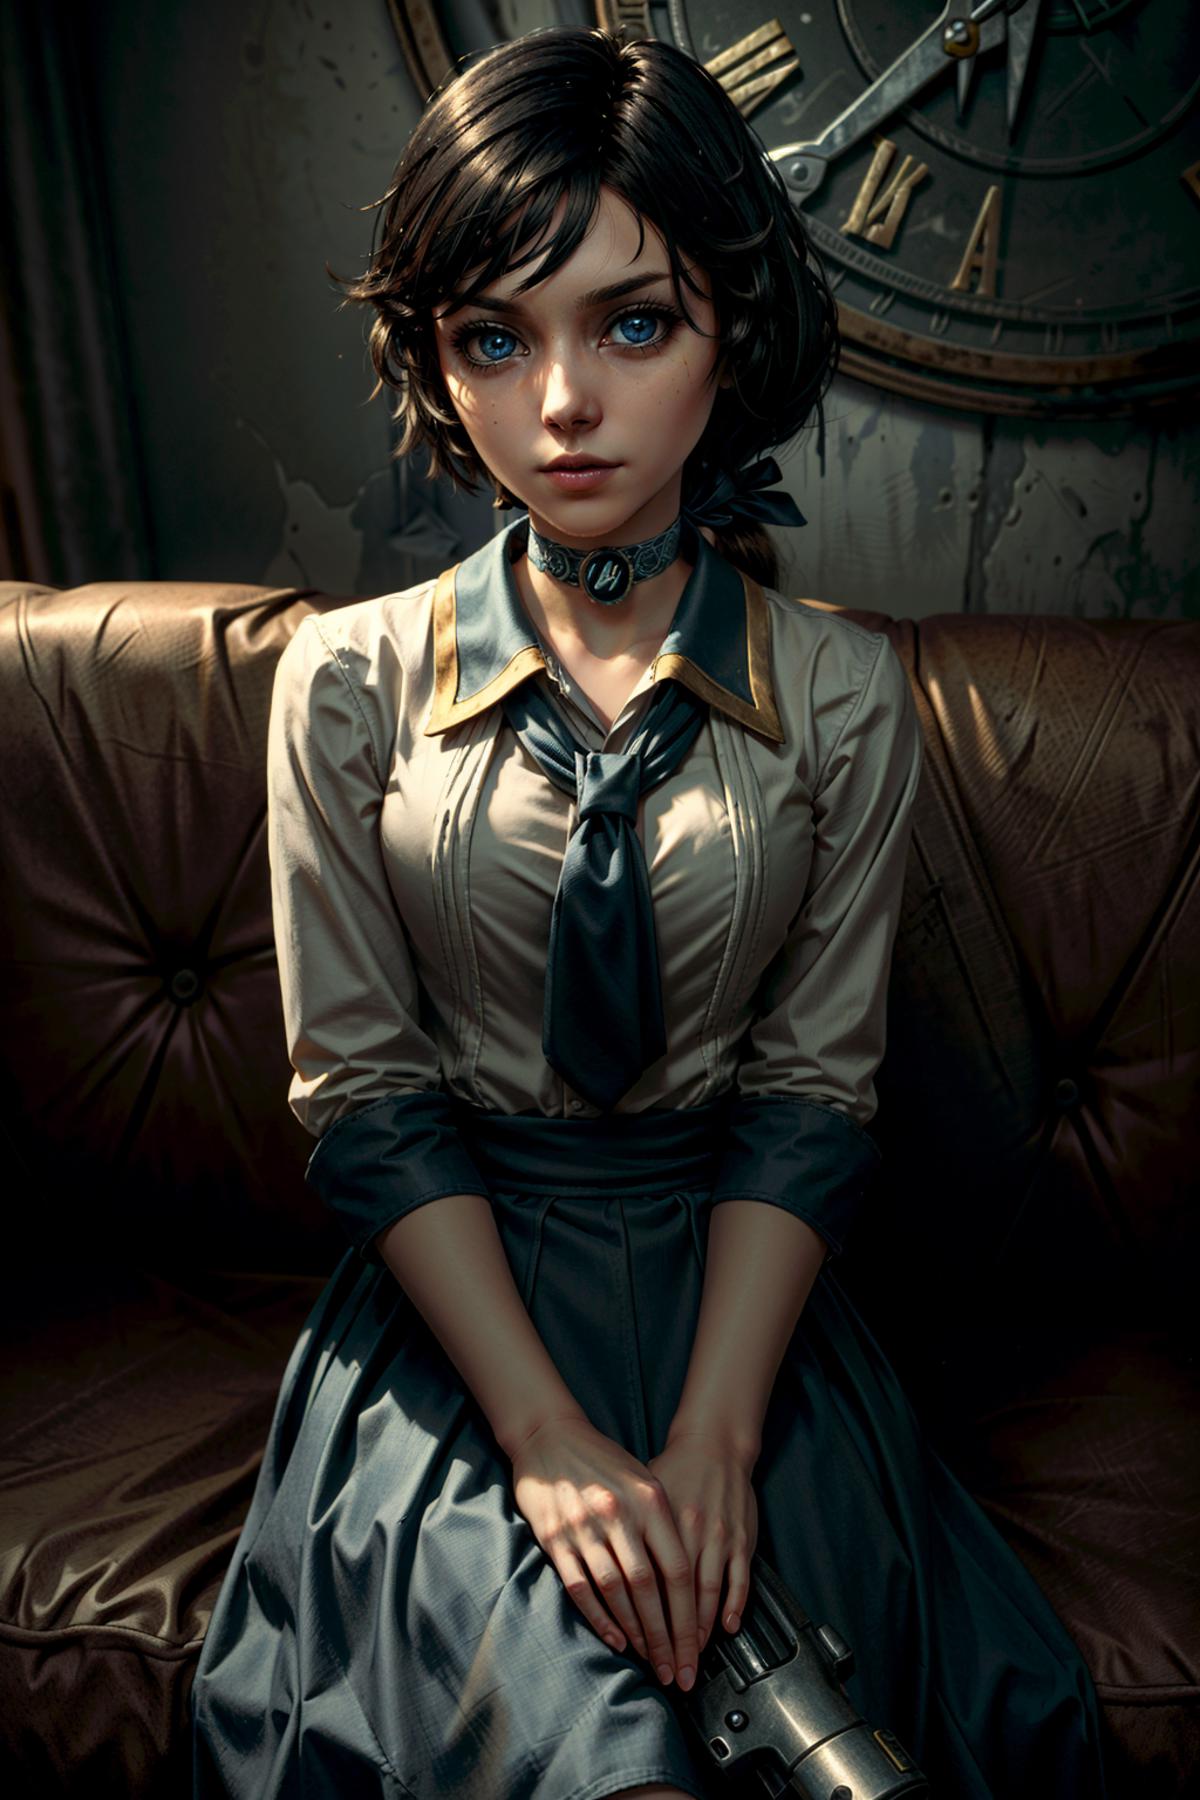 Elizabeth from BioShock Infinite image by BloodRedKittie